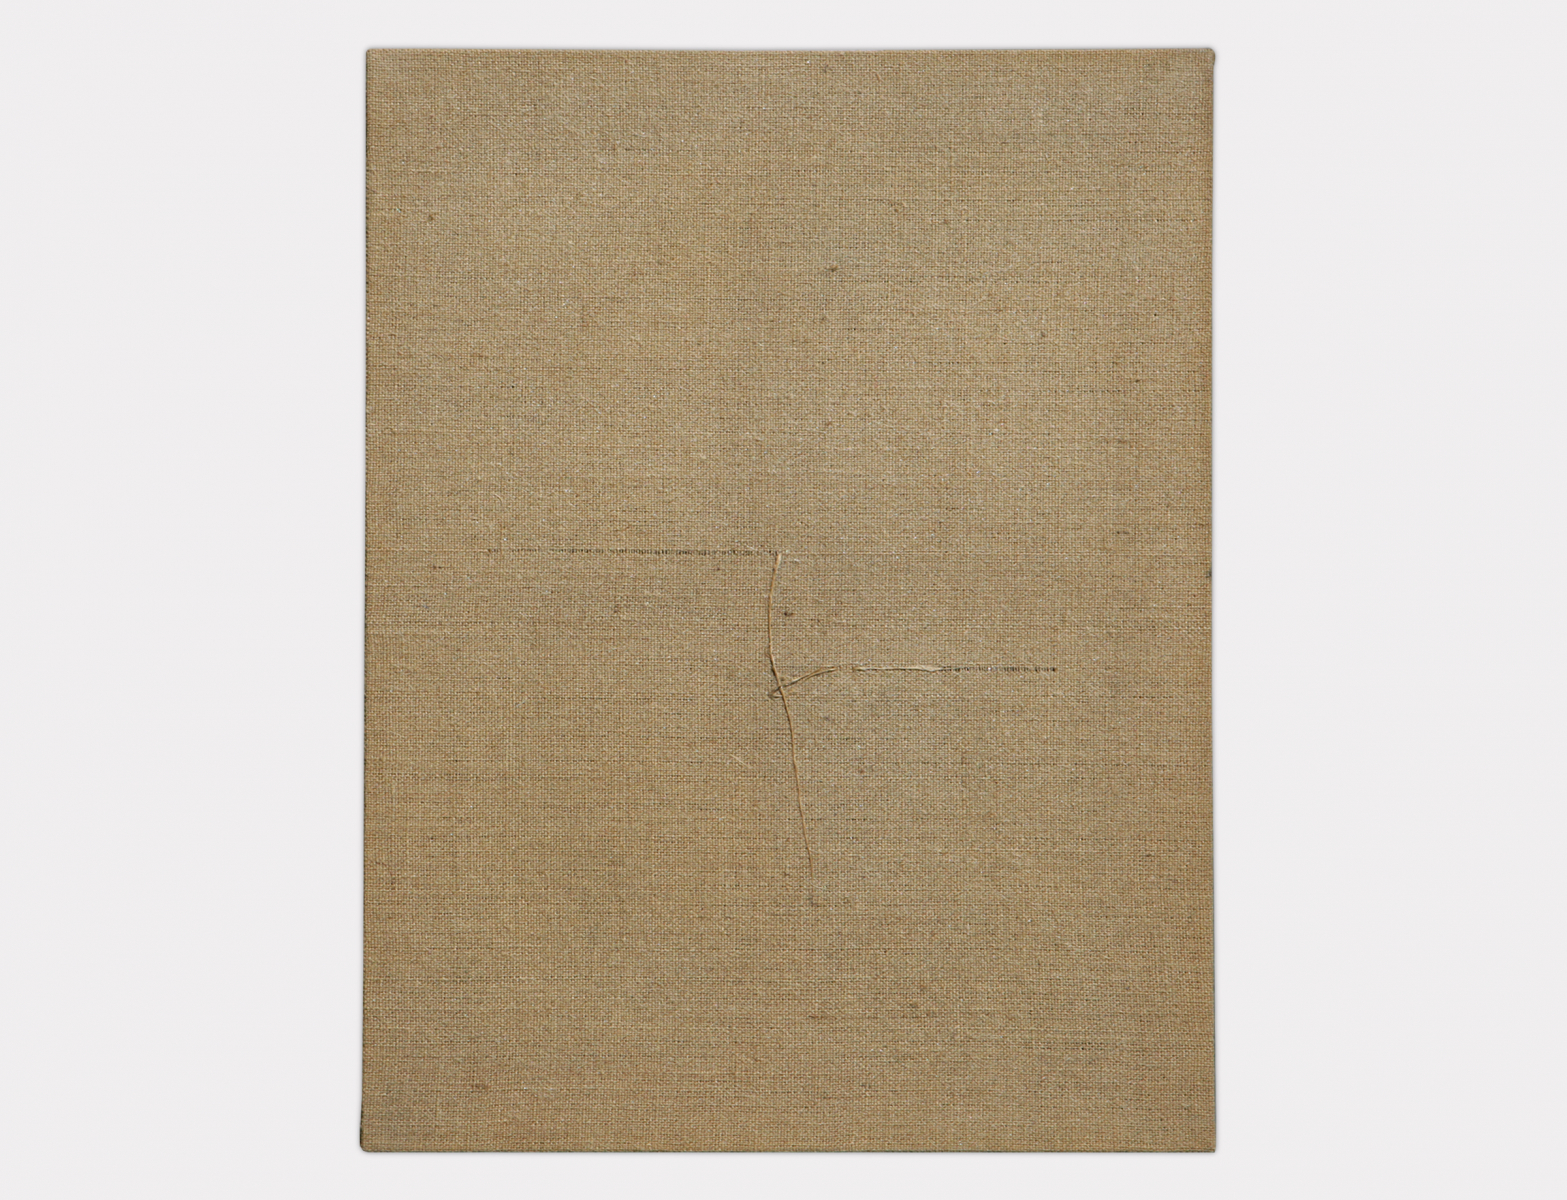 Untitled-7582, 1975, Hemp Cloth, 65.2x50cm